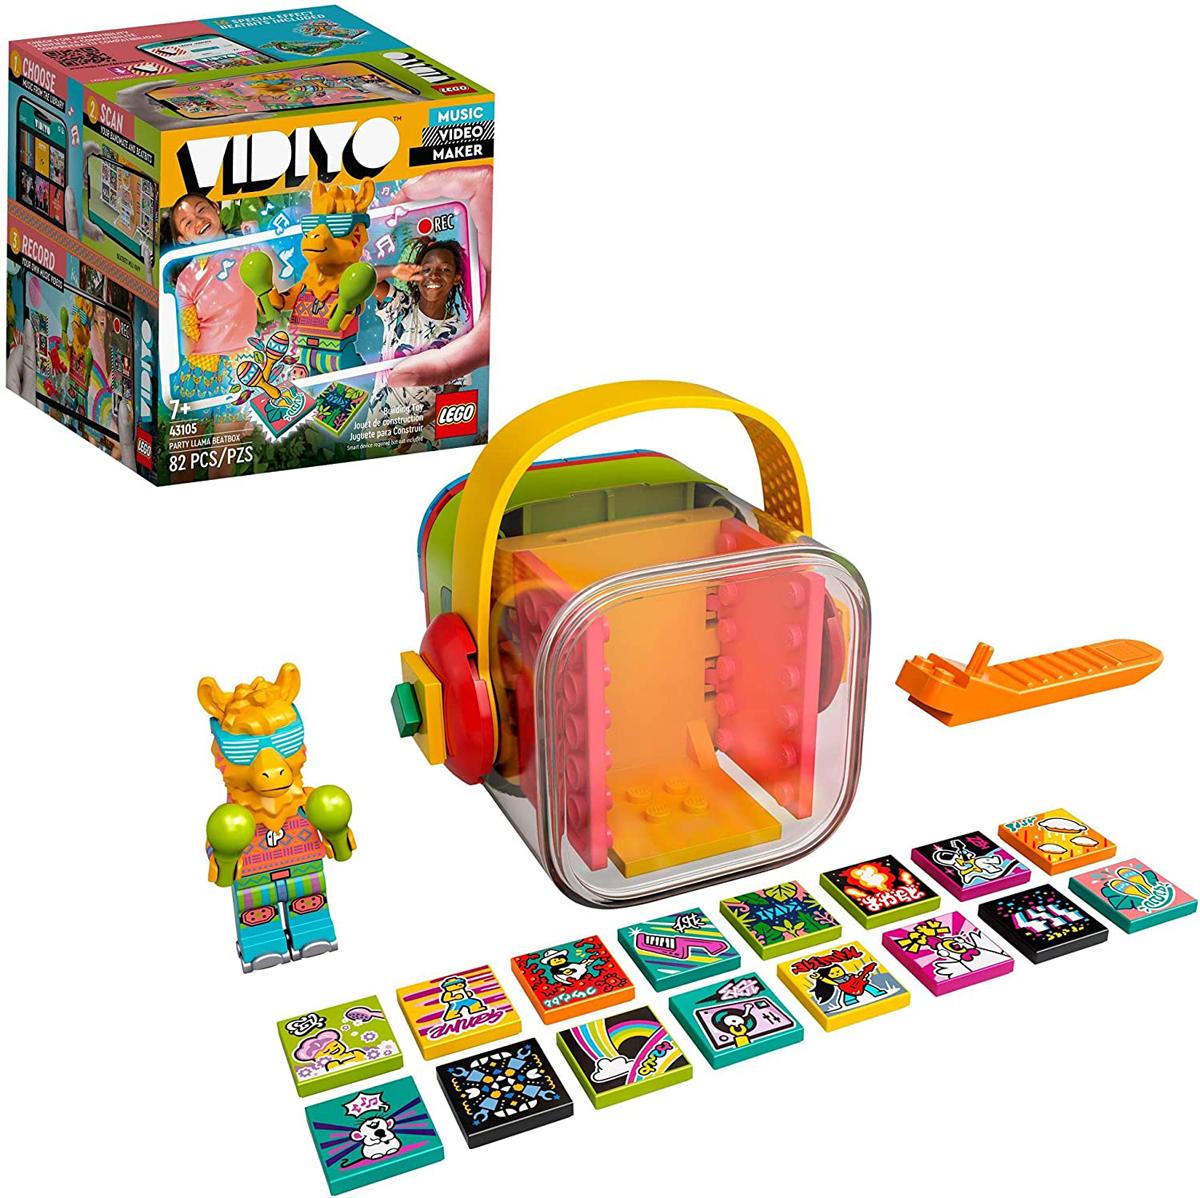 82-Piece Lego Vidiyo Party Llama Beatbox Building Kit for $9.98